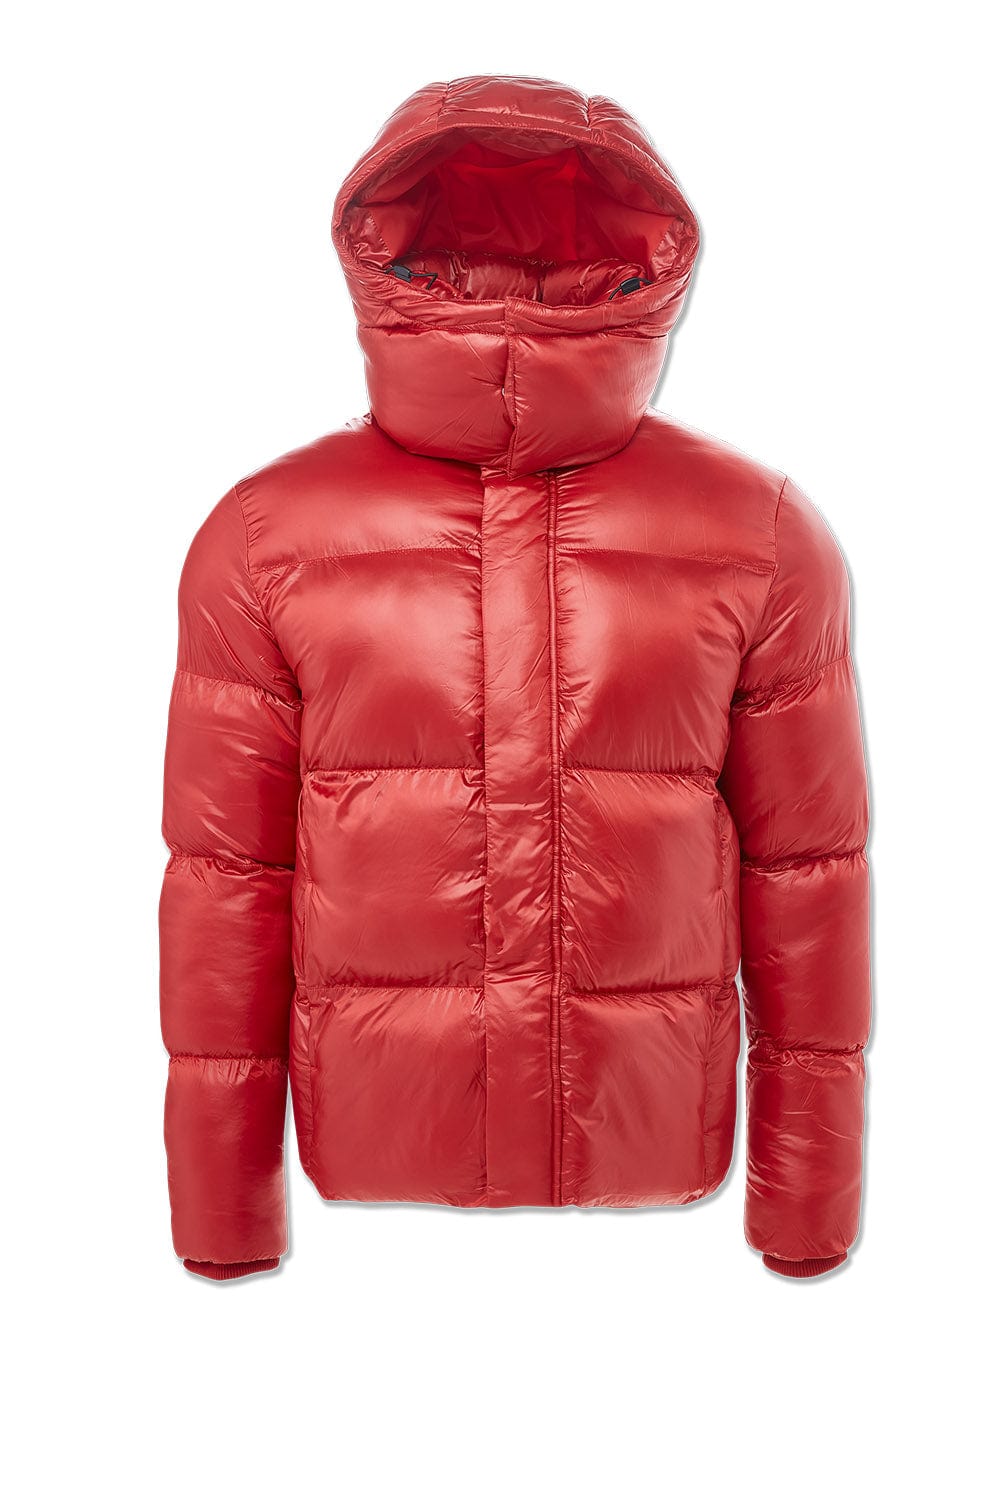 Jordan Craig Astoria Bubble Jacket (Red) S / Red / AA04